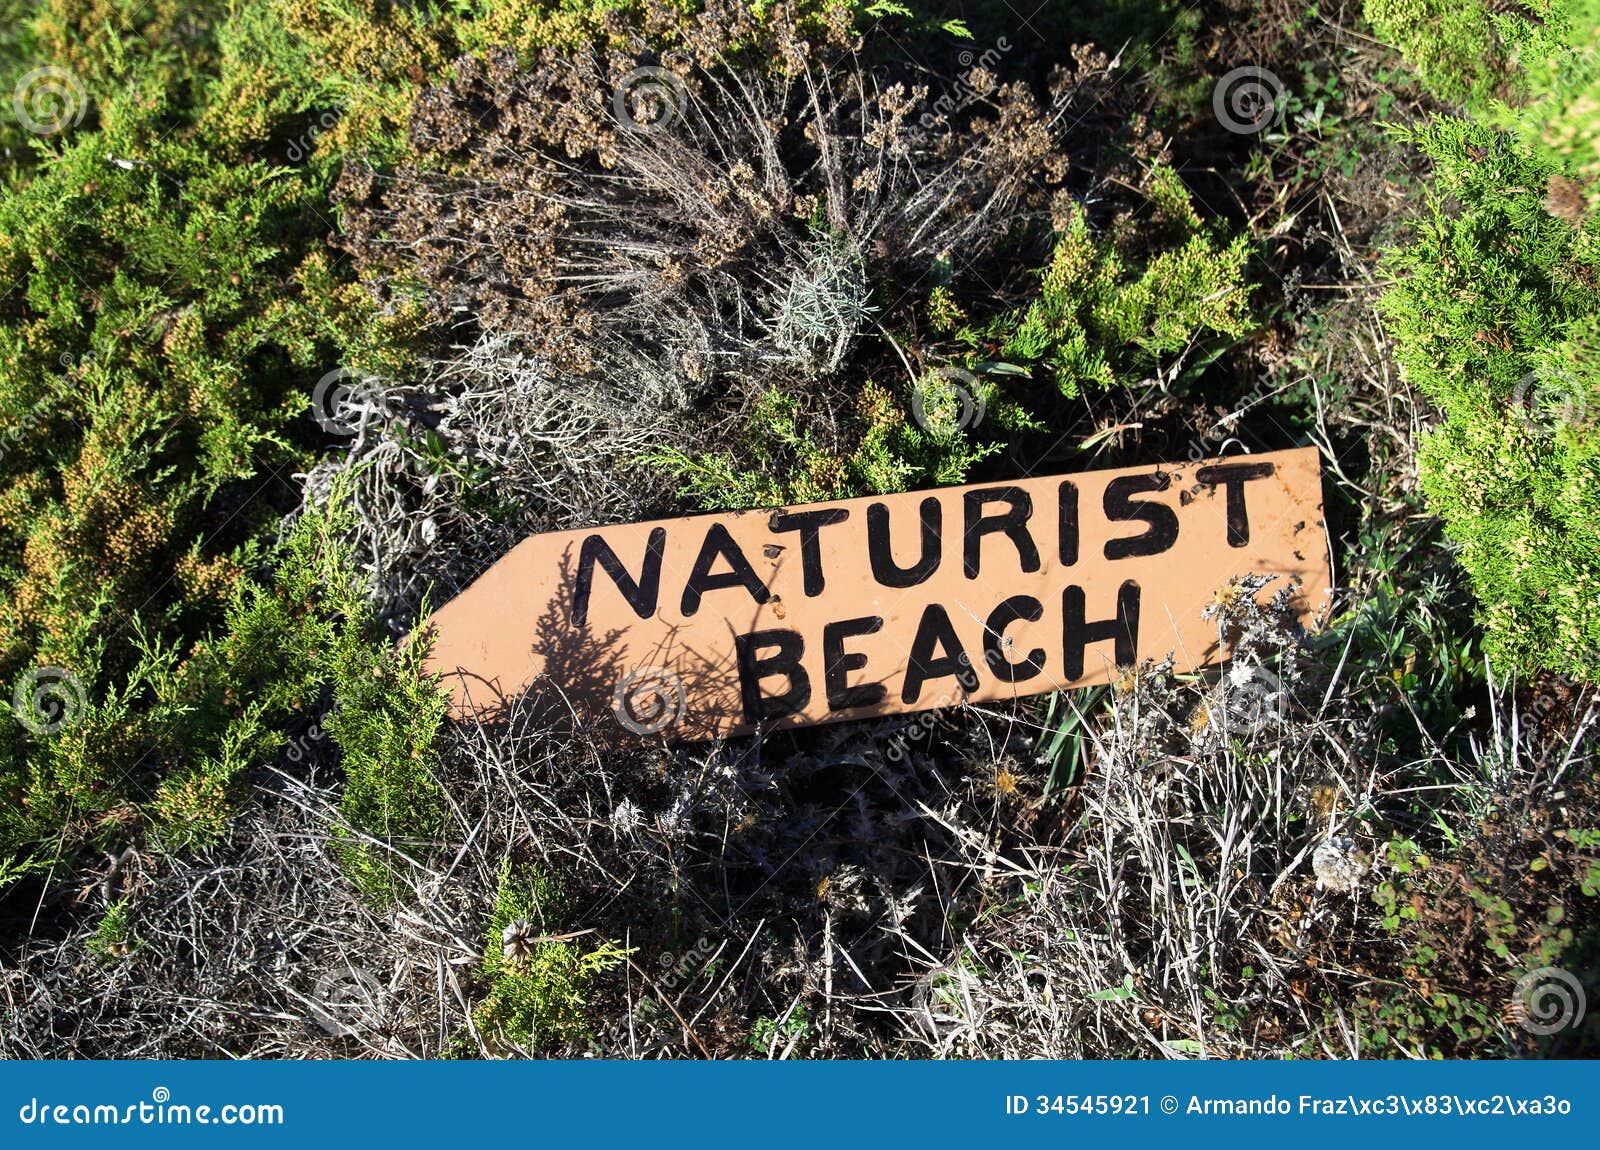 naturist beach sign